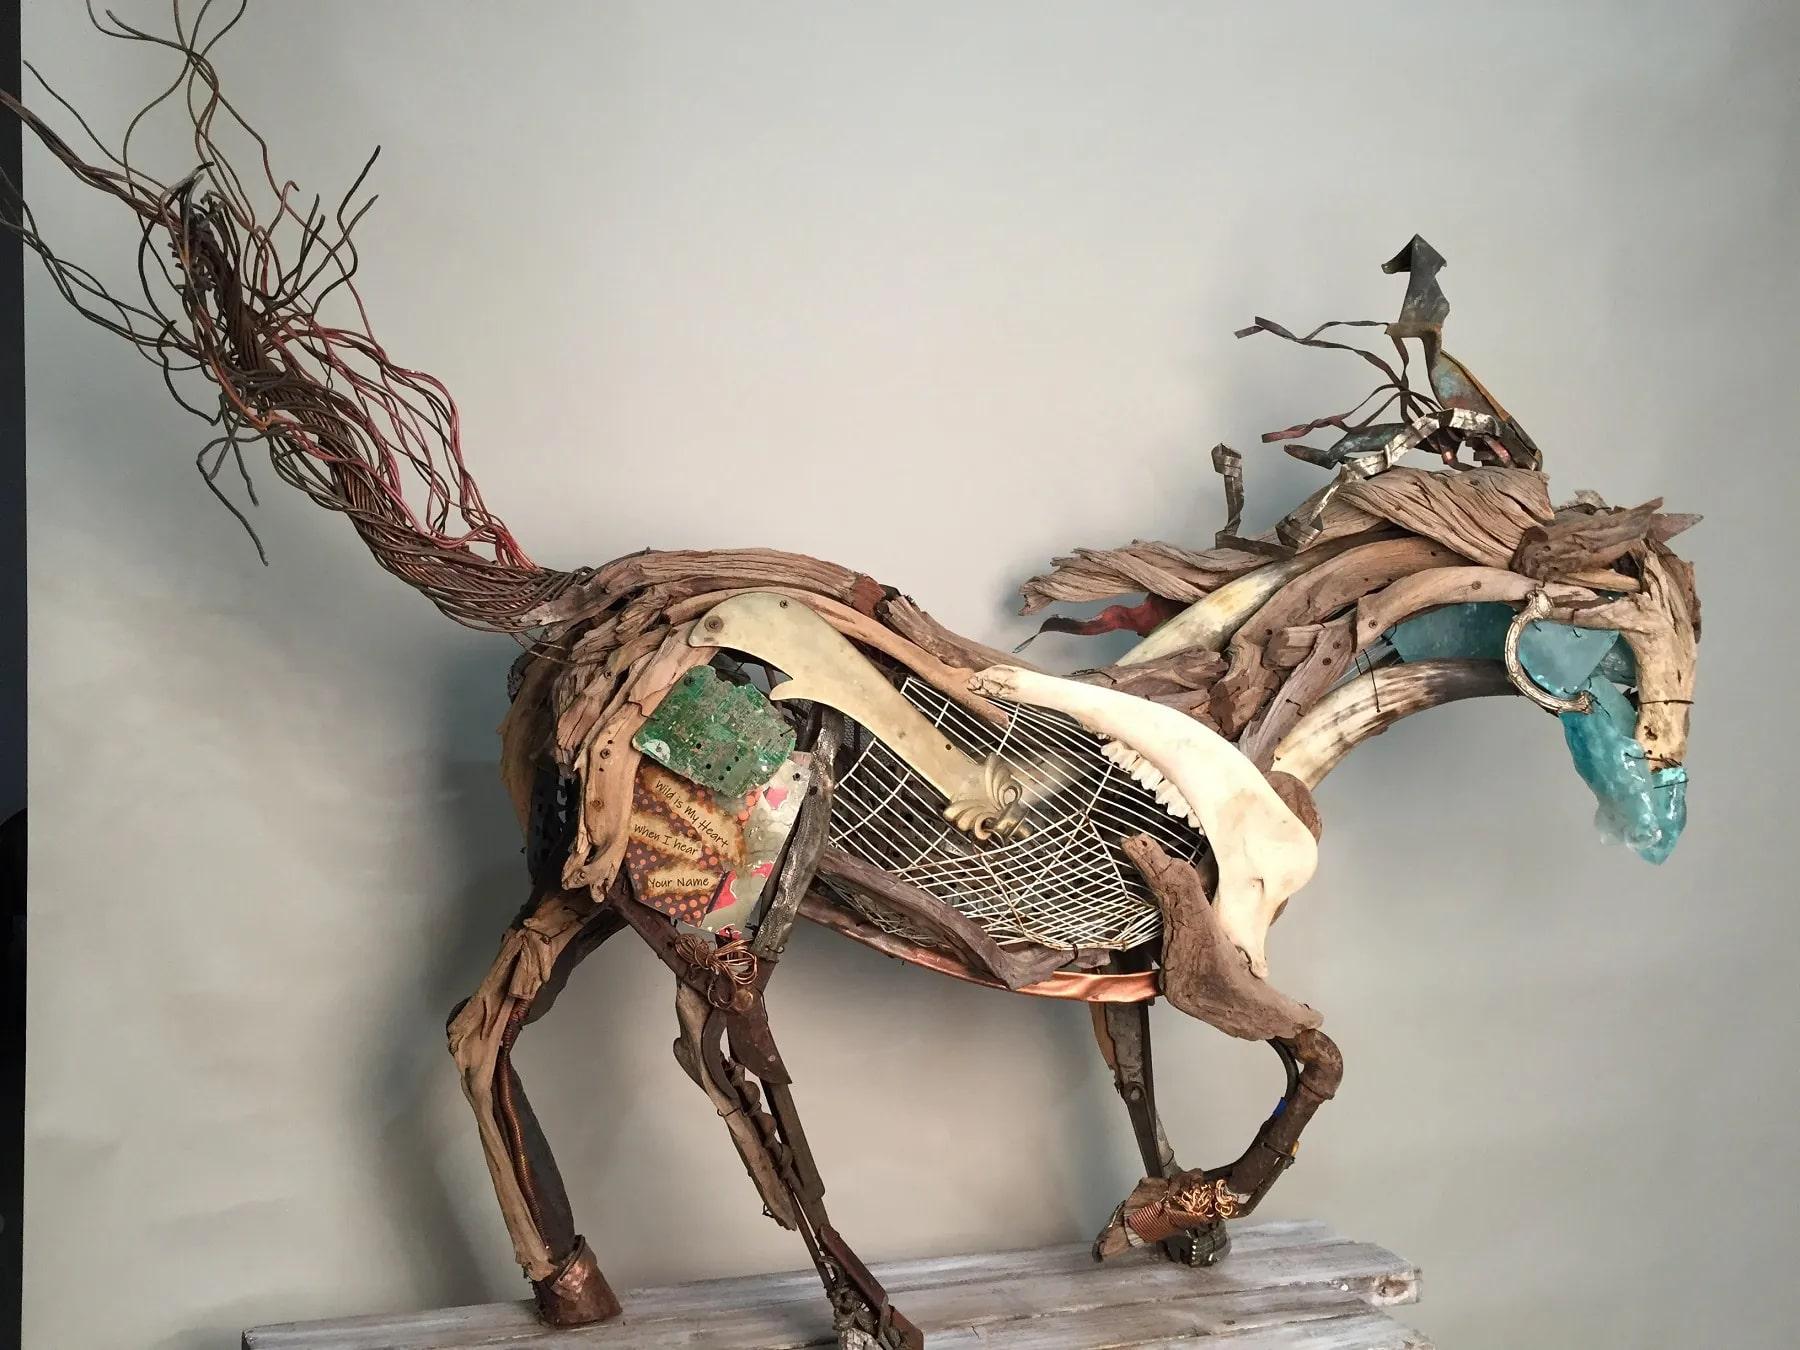 Debbie Korbel Figurative Sculpture - Surrealist Horse Sculpture Titled, "Wild"